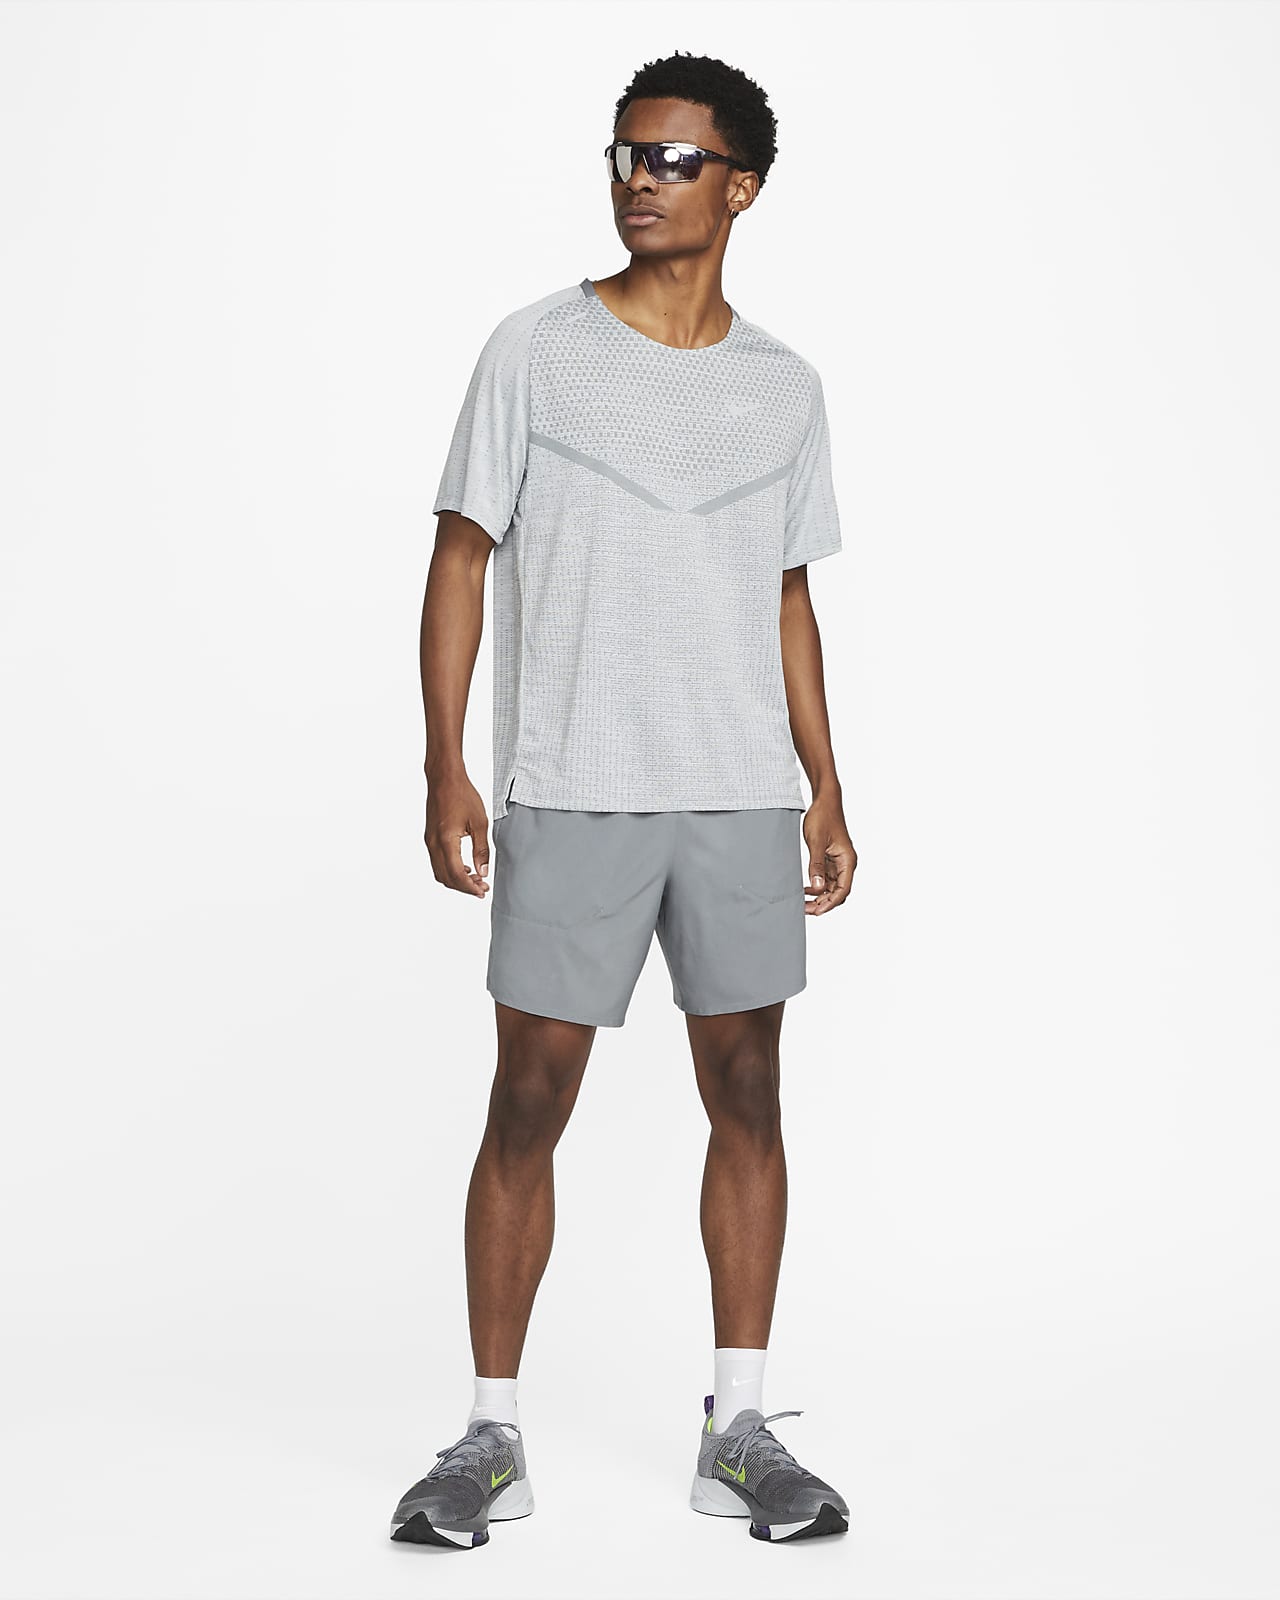 Men's Dri-FIT ADV Short-Sleeve Top. Nike.com